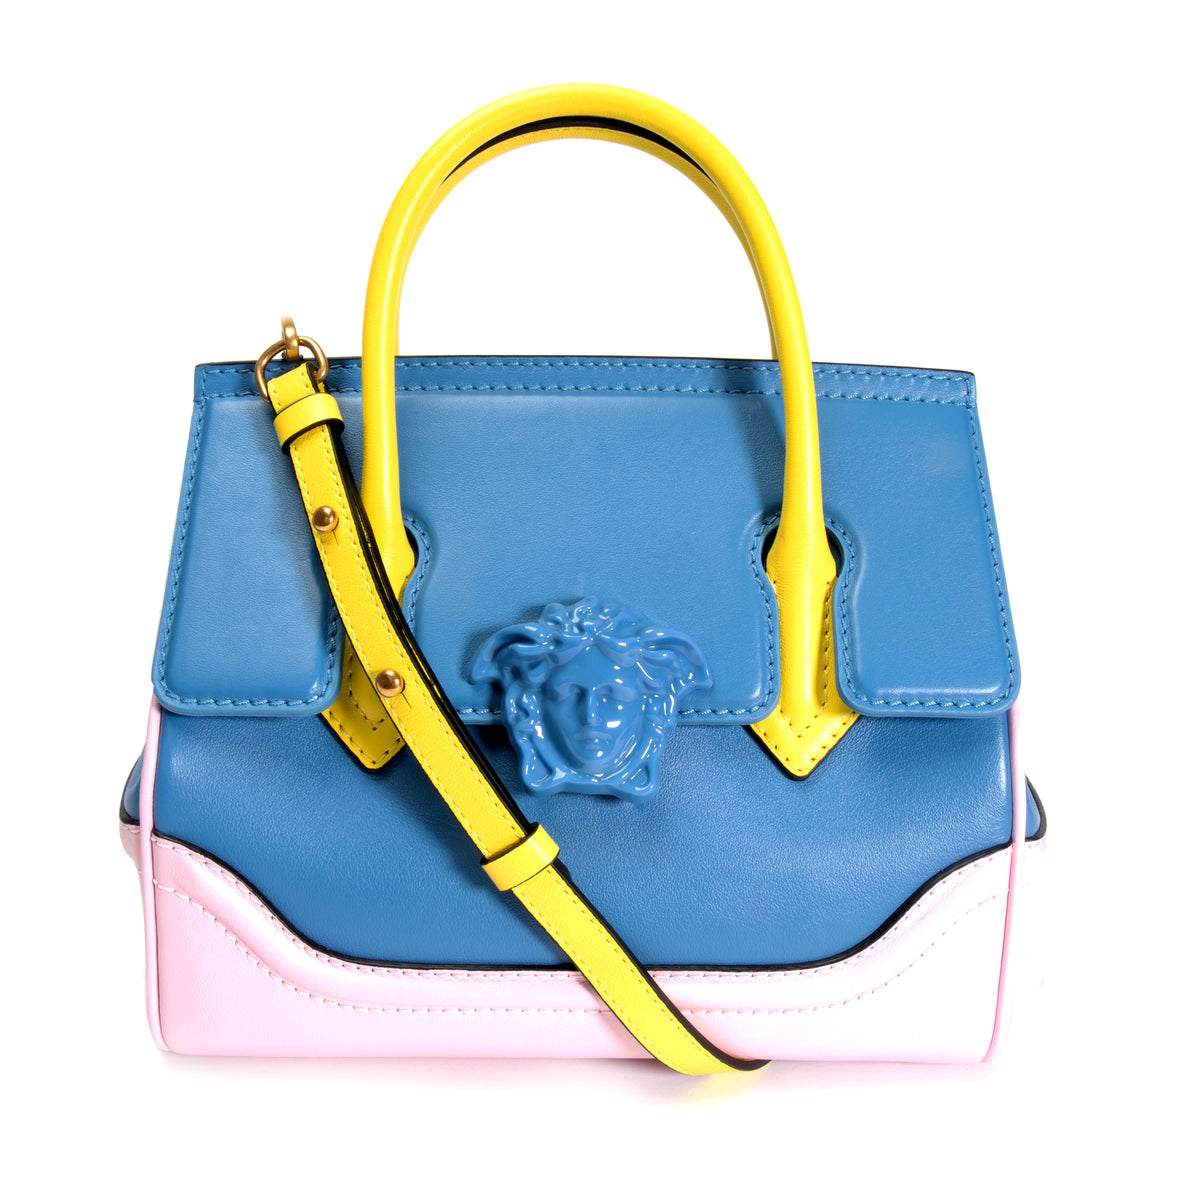 Versace's exclusive Palazzo Empire bag for Hong Kong